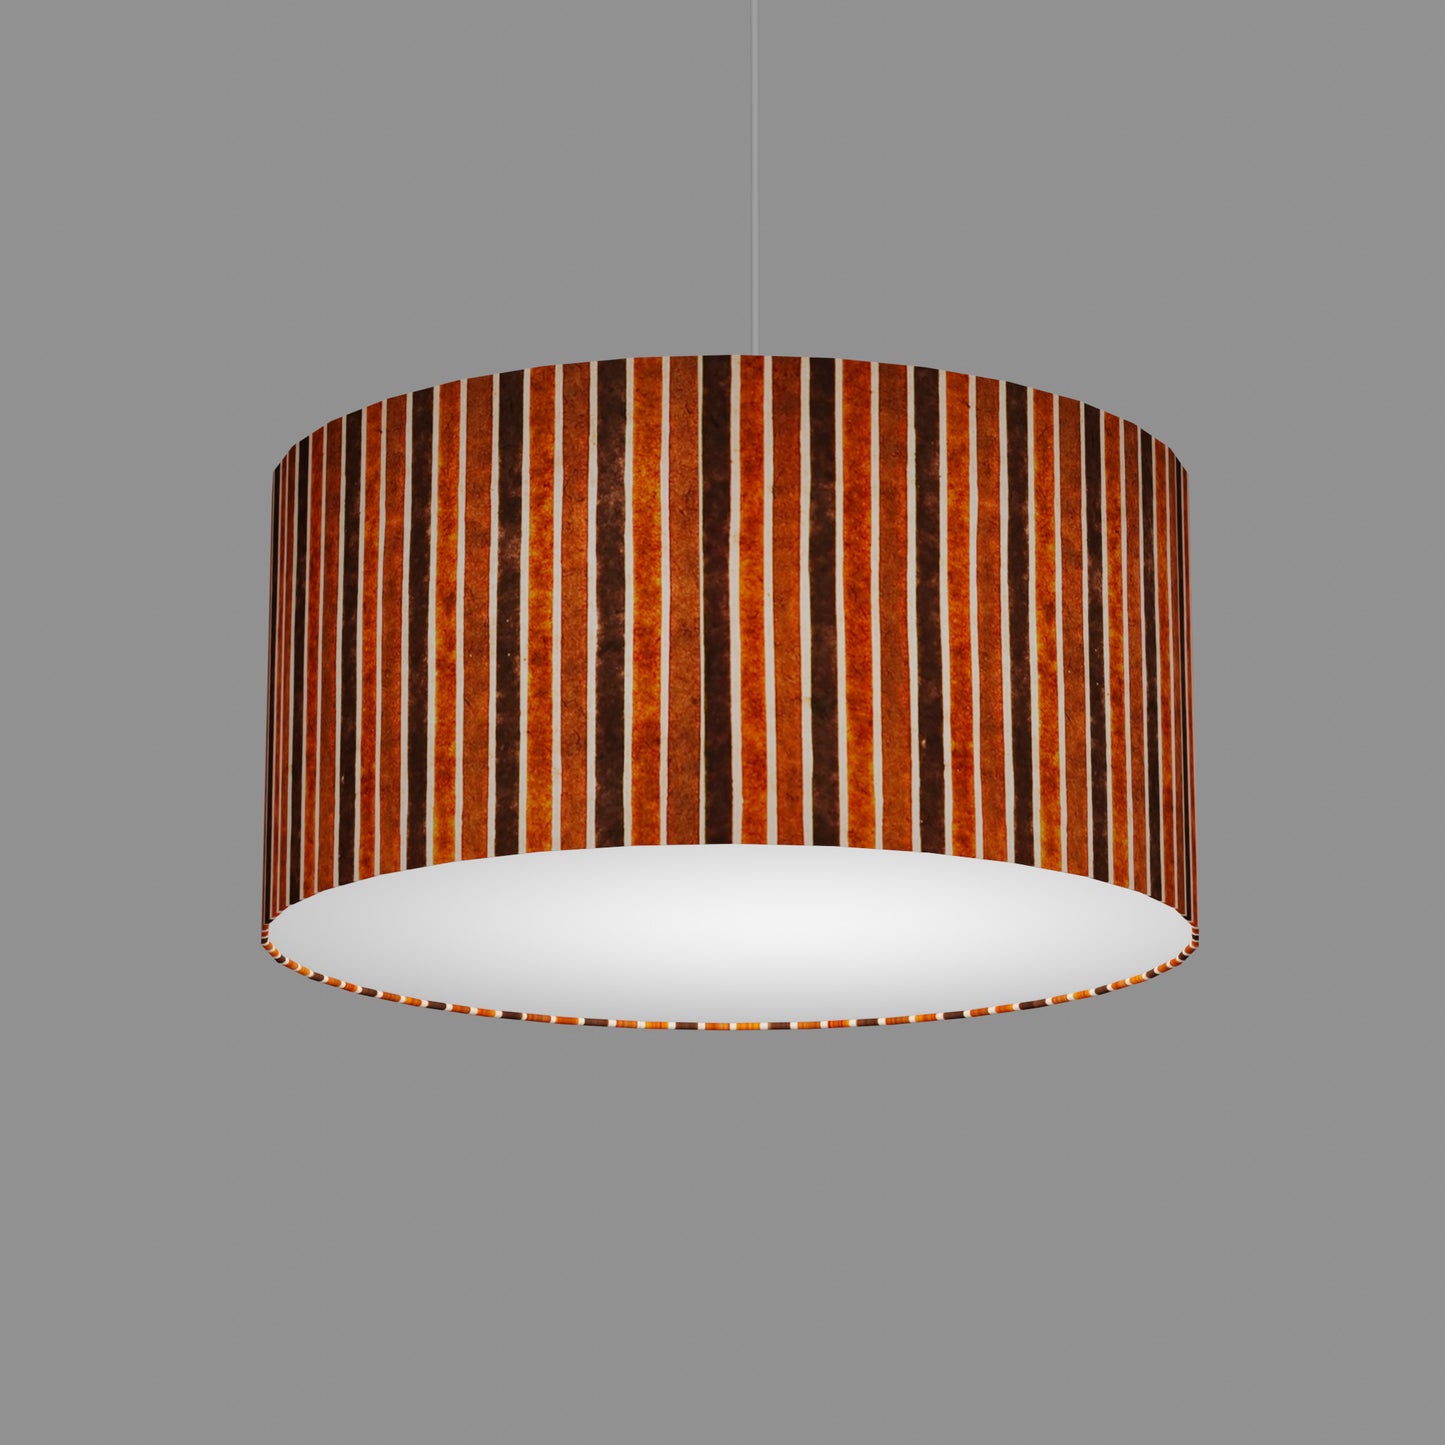 Drum Lamp Shade - P07 - Batik Stripes Brown, 50cm(d) x 25cm(h)